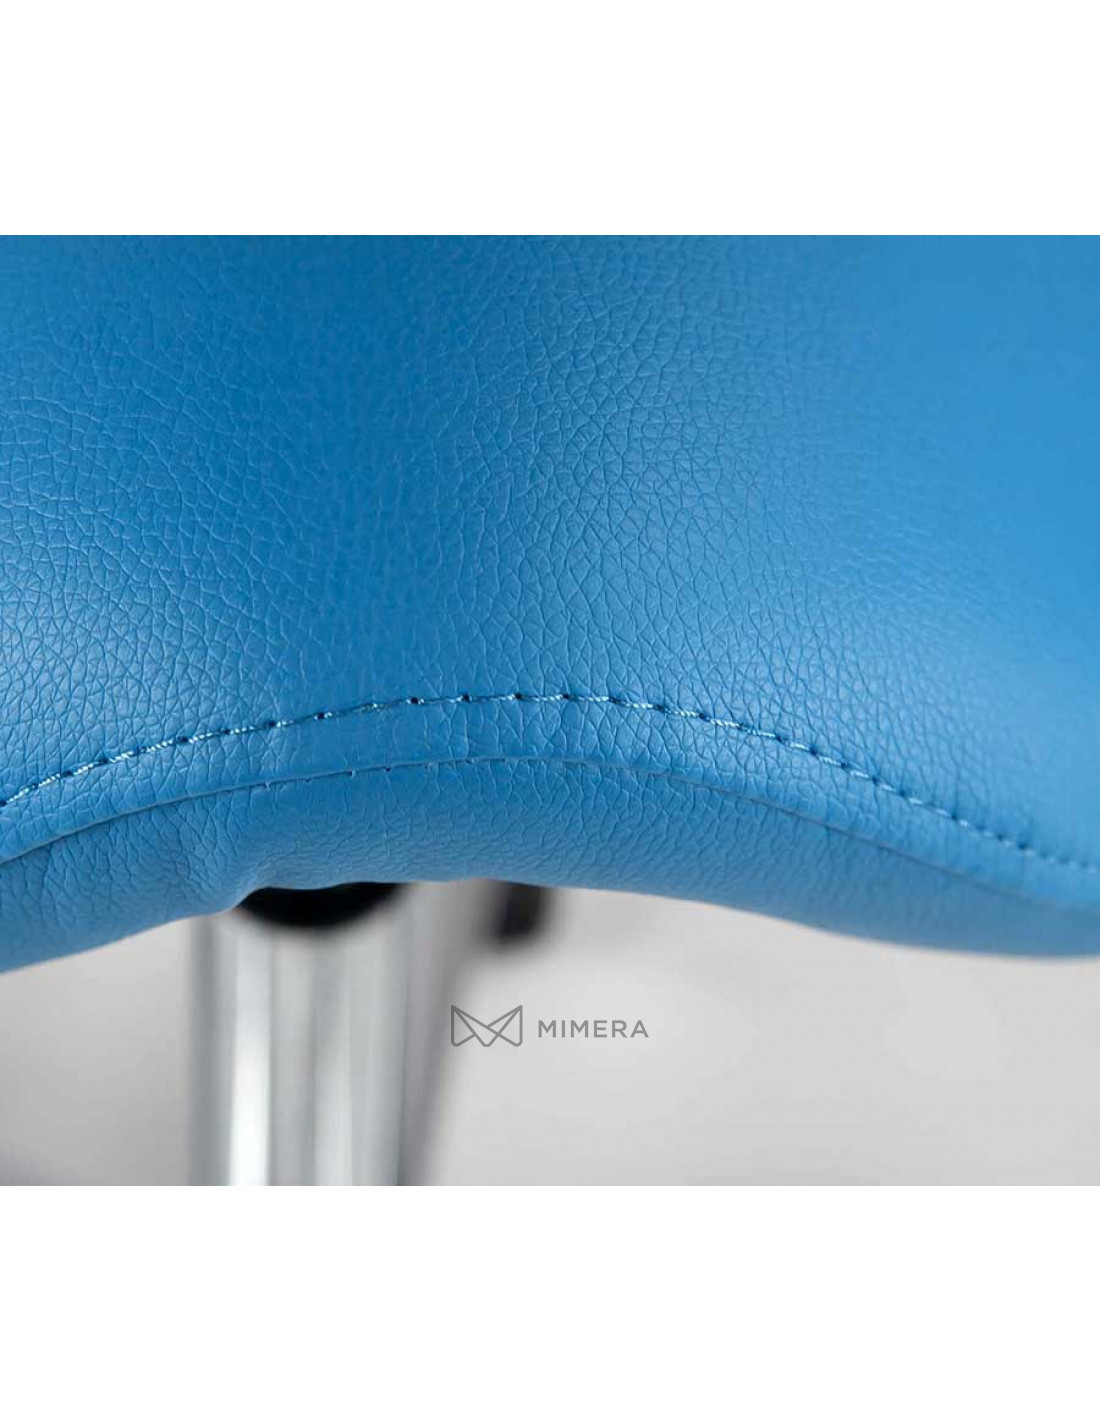 Kozmetická stolička SMART - Modrá